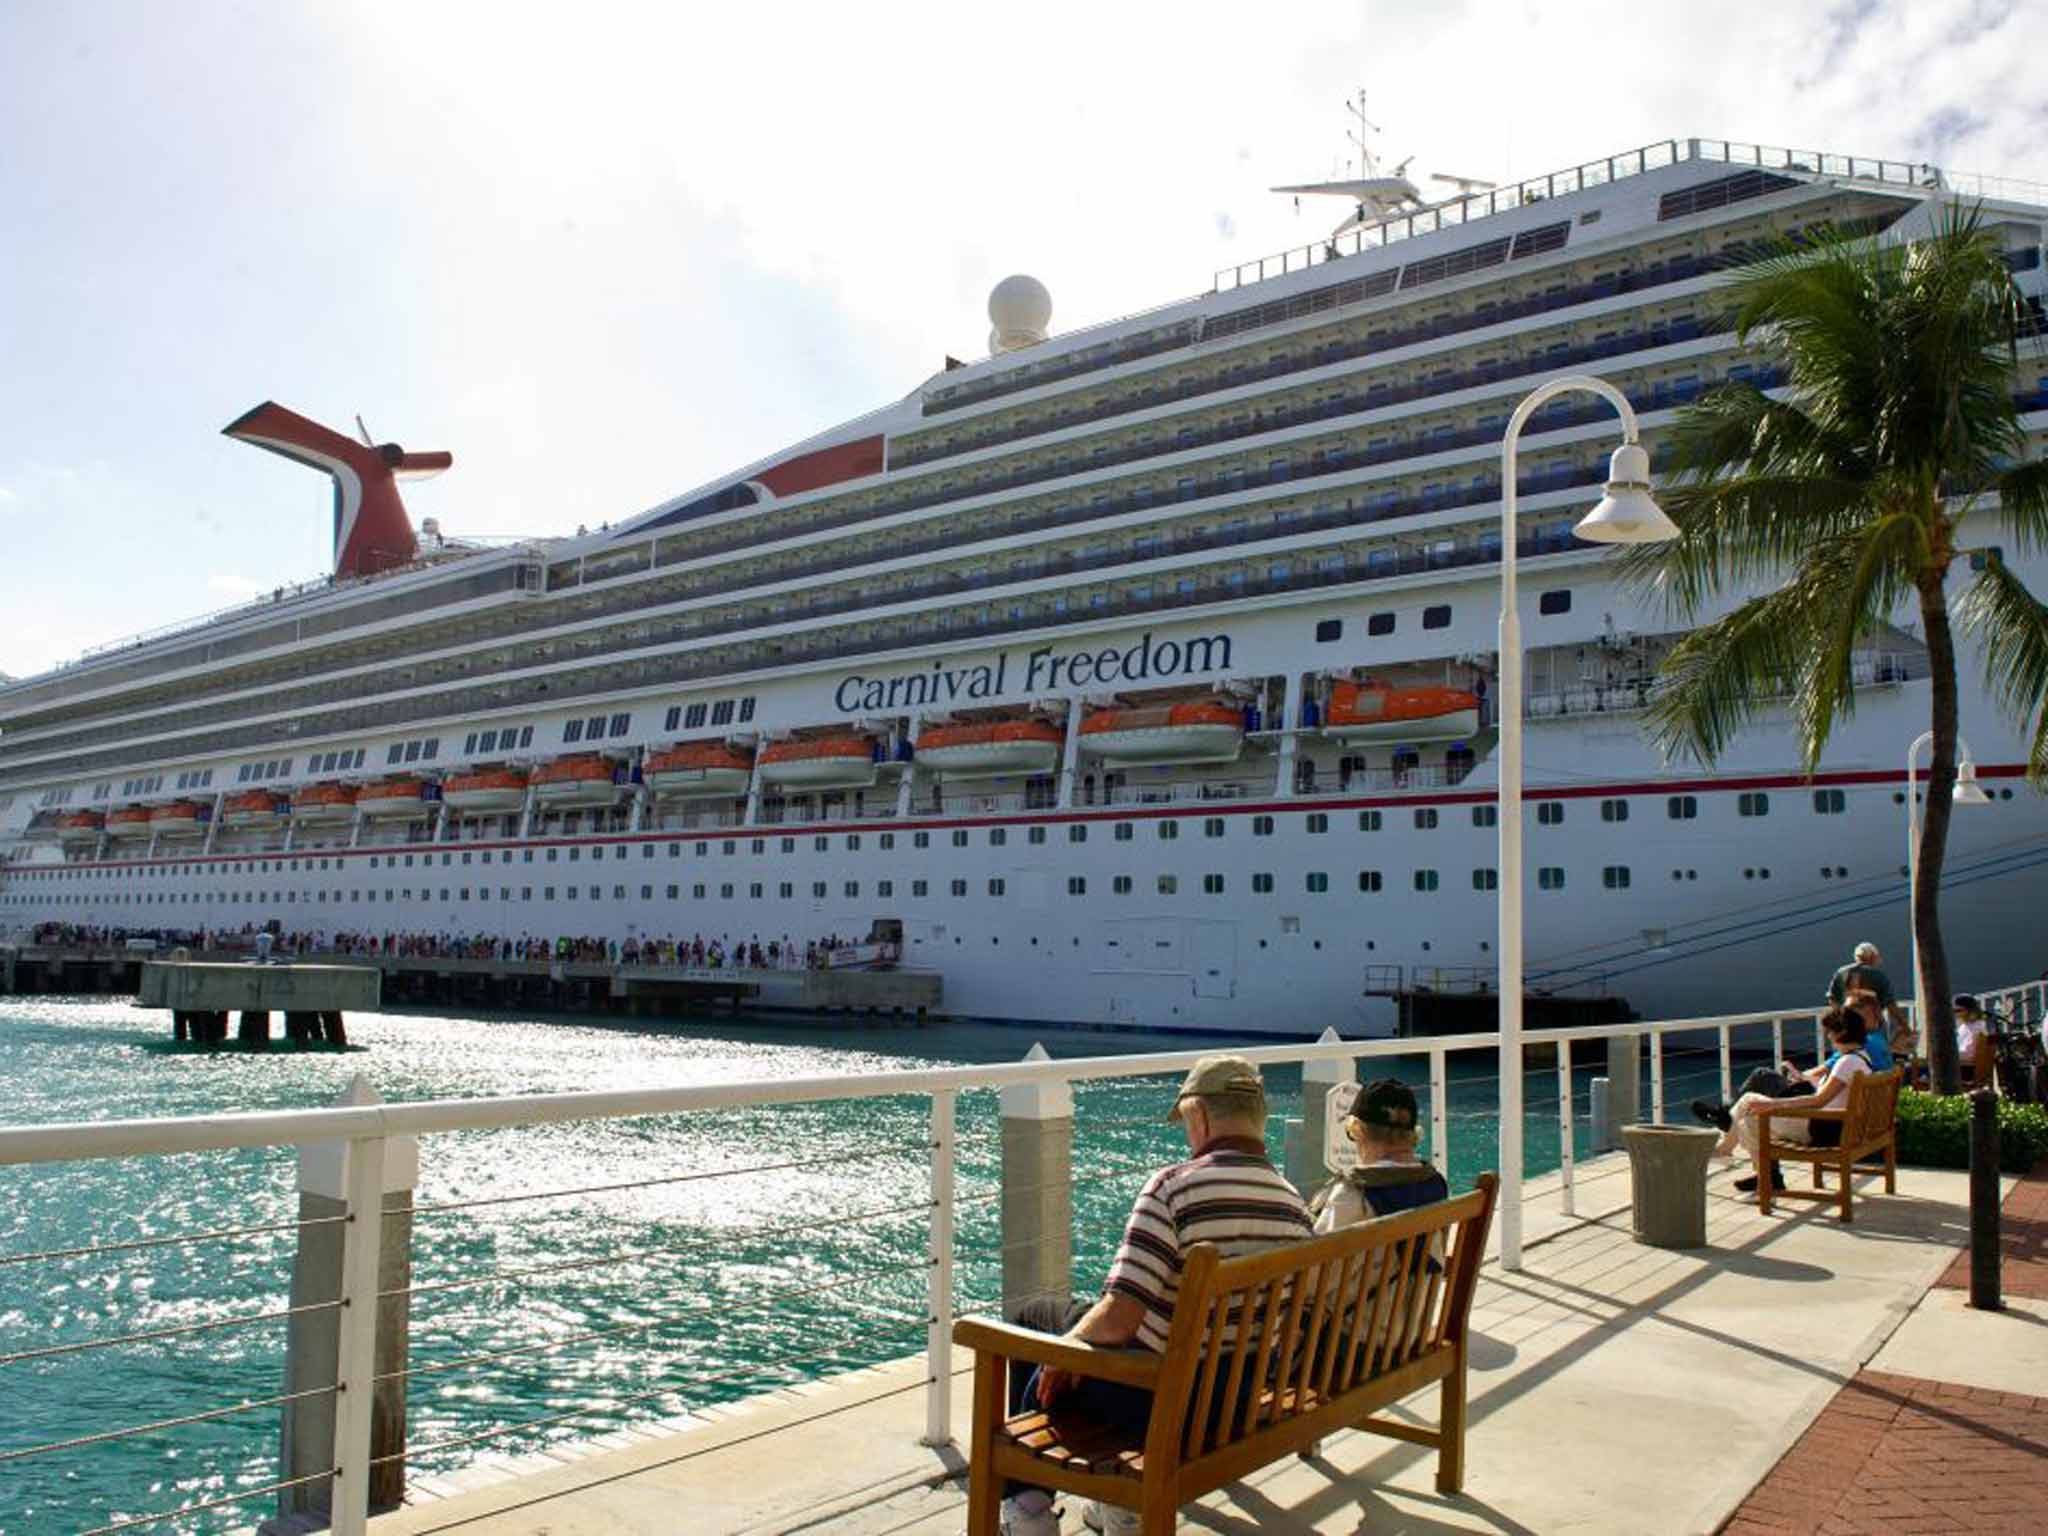 Cruise control: 'Carnival Freedom'